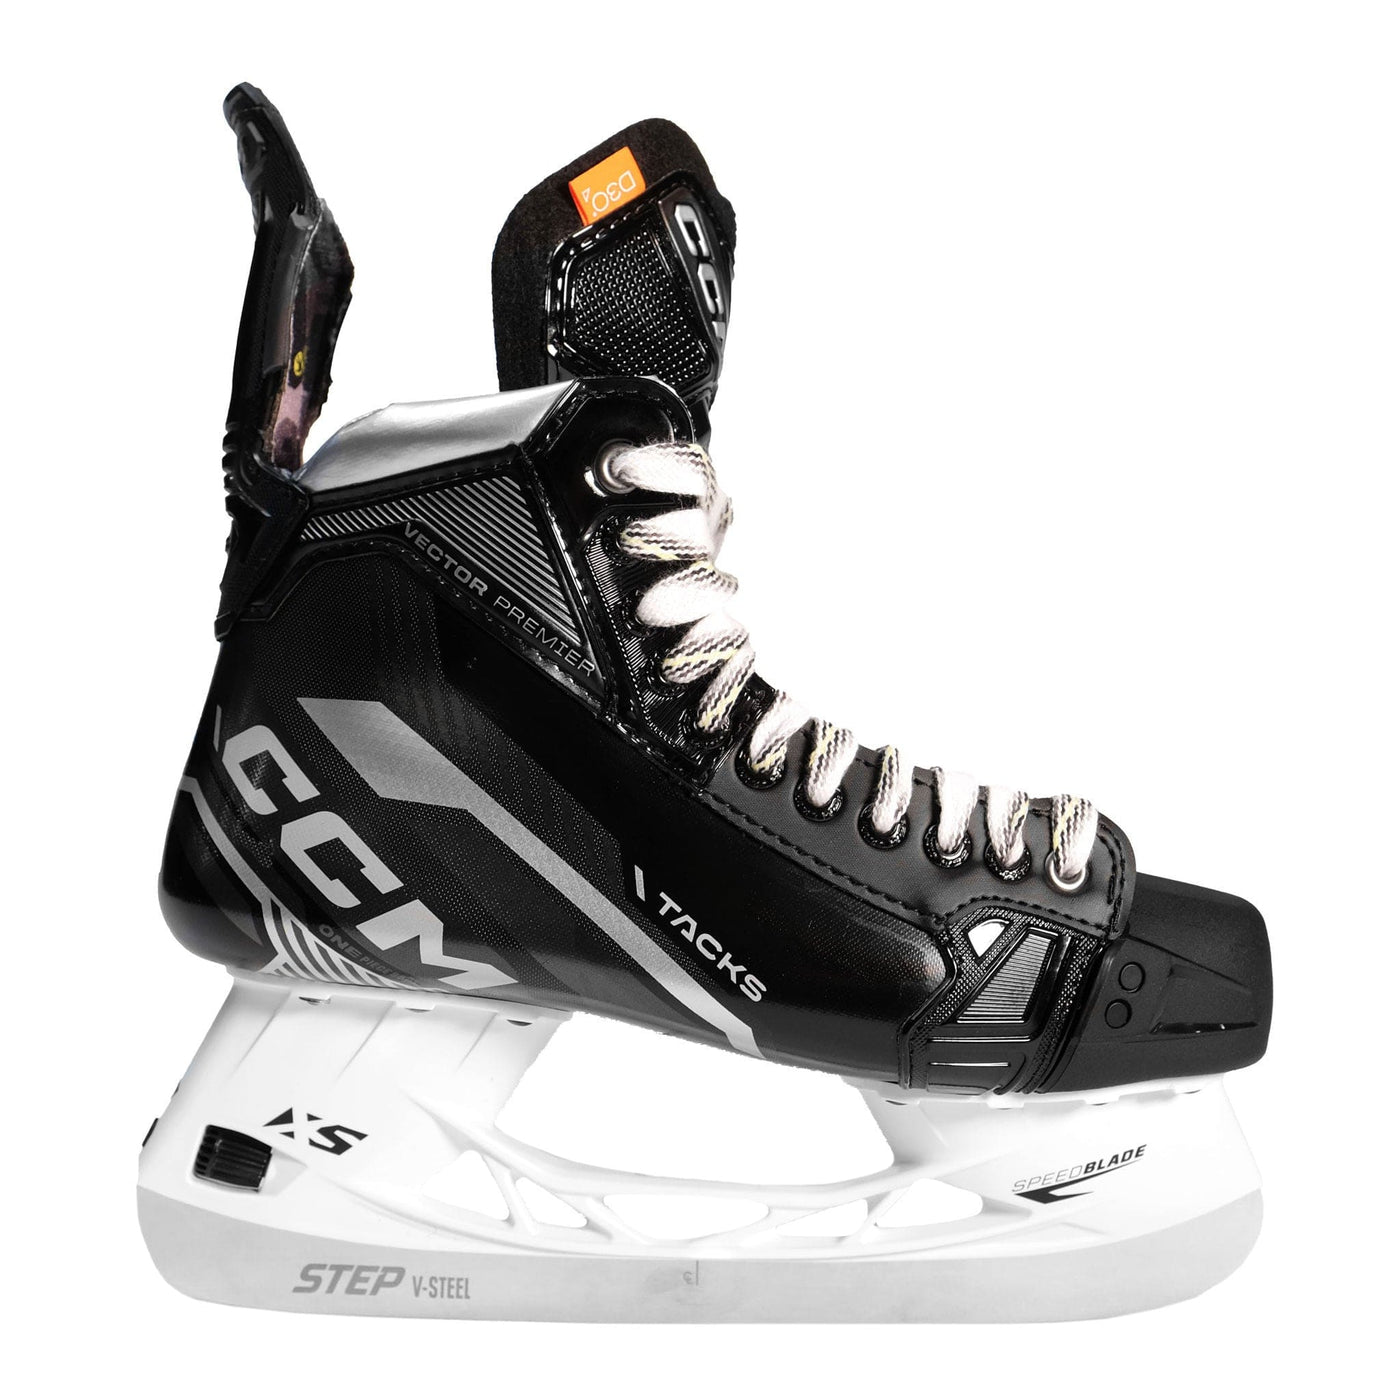 CCM Tacks Vector Premier Intermediate Hockey Skates - The Hockey Shop Source For Sports